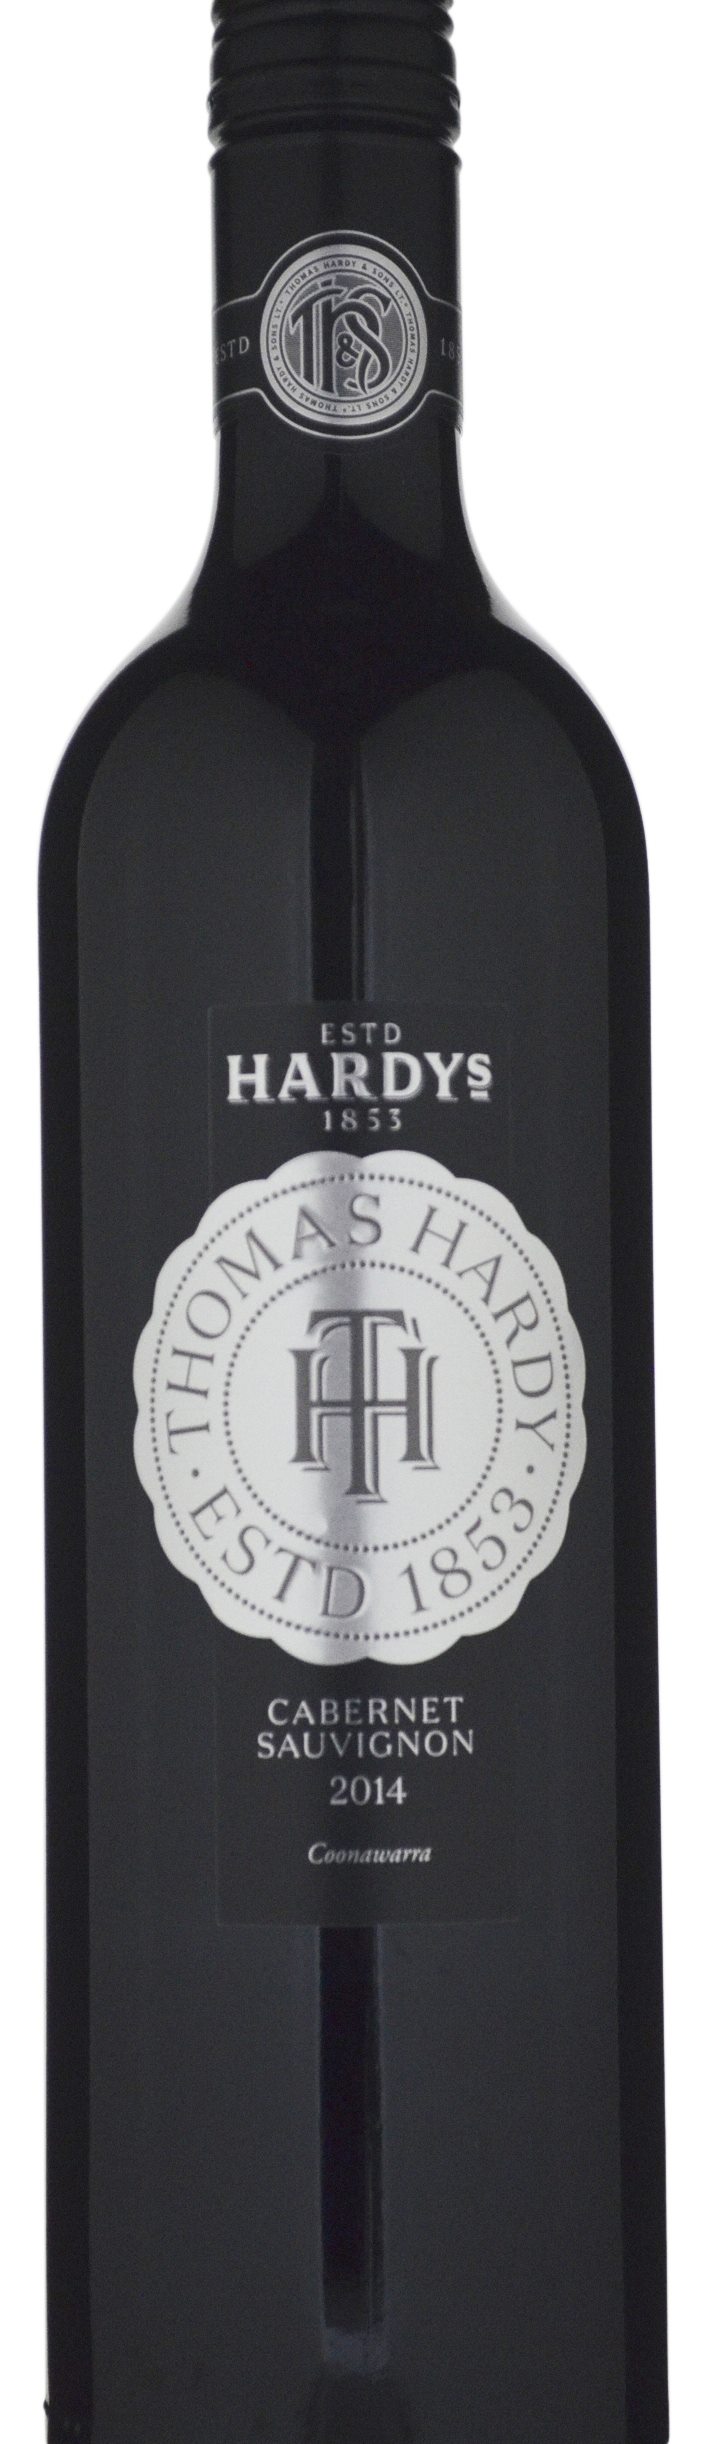 Hardy's Thomas Hardy Cabernet Sauvignon 2014